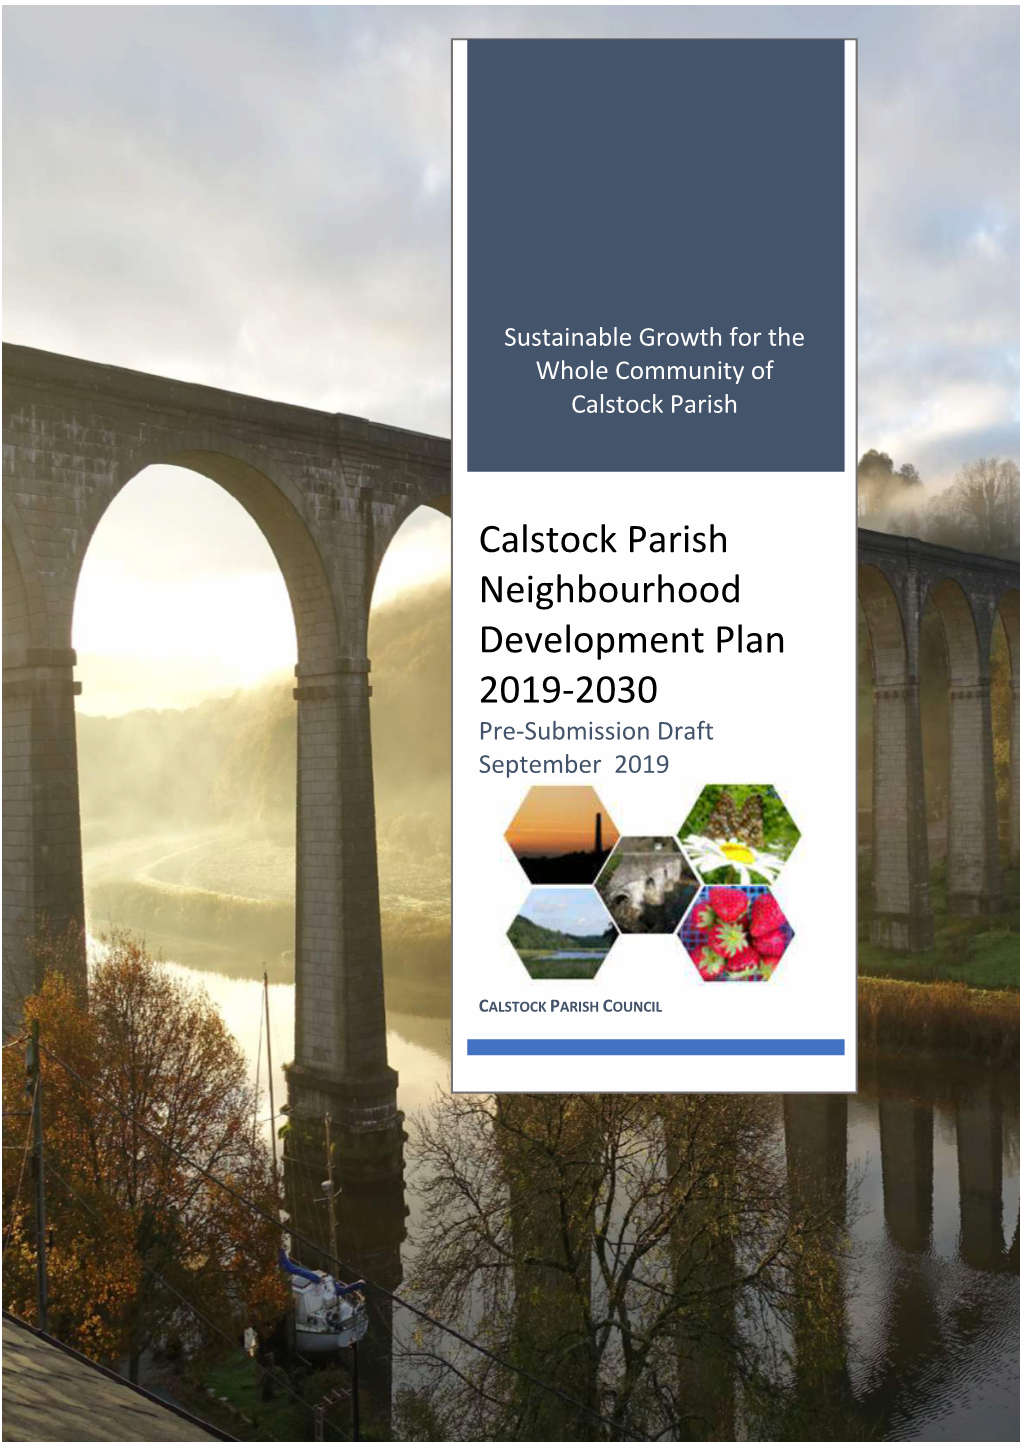 Calstock Parish Neighbourhood Development Plan 2019-2030 Pre-Submission Draft September 2019